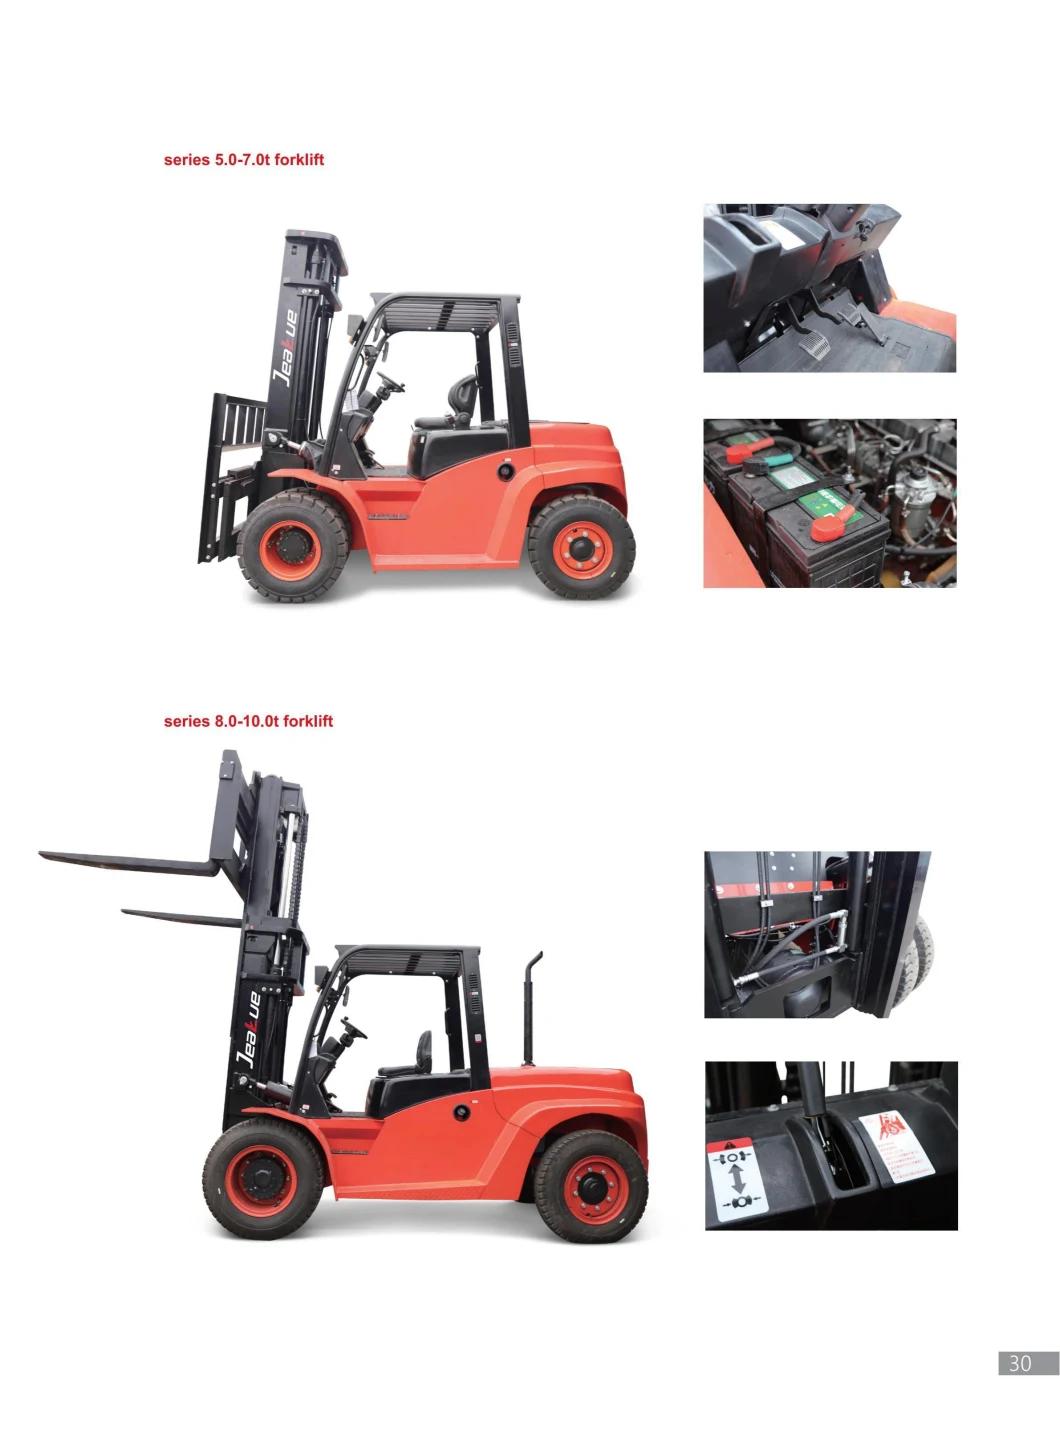 Shanghai Jeakue Material Handling Equipment 5ton - 10 Ton Diesel Forklift